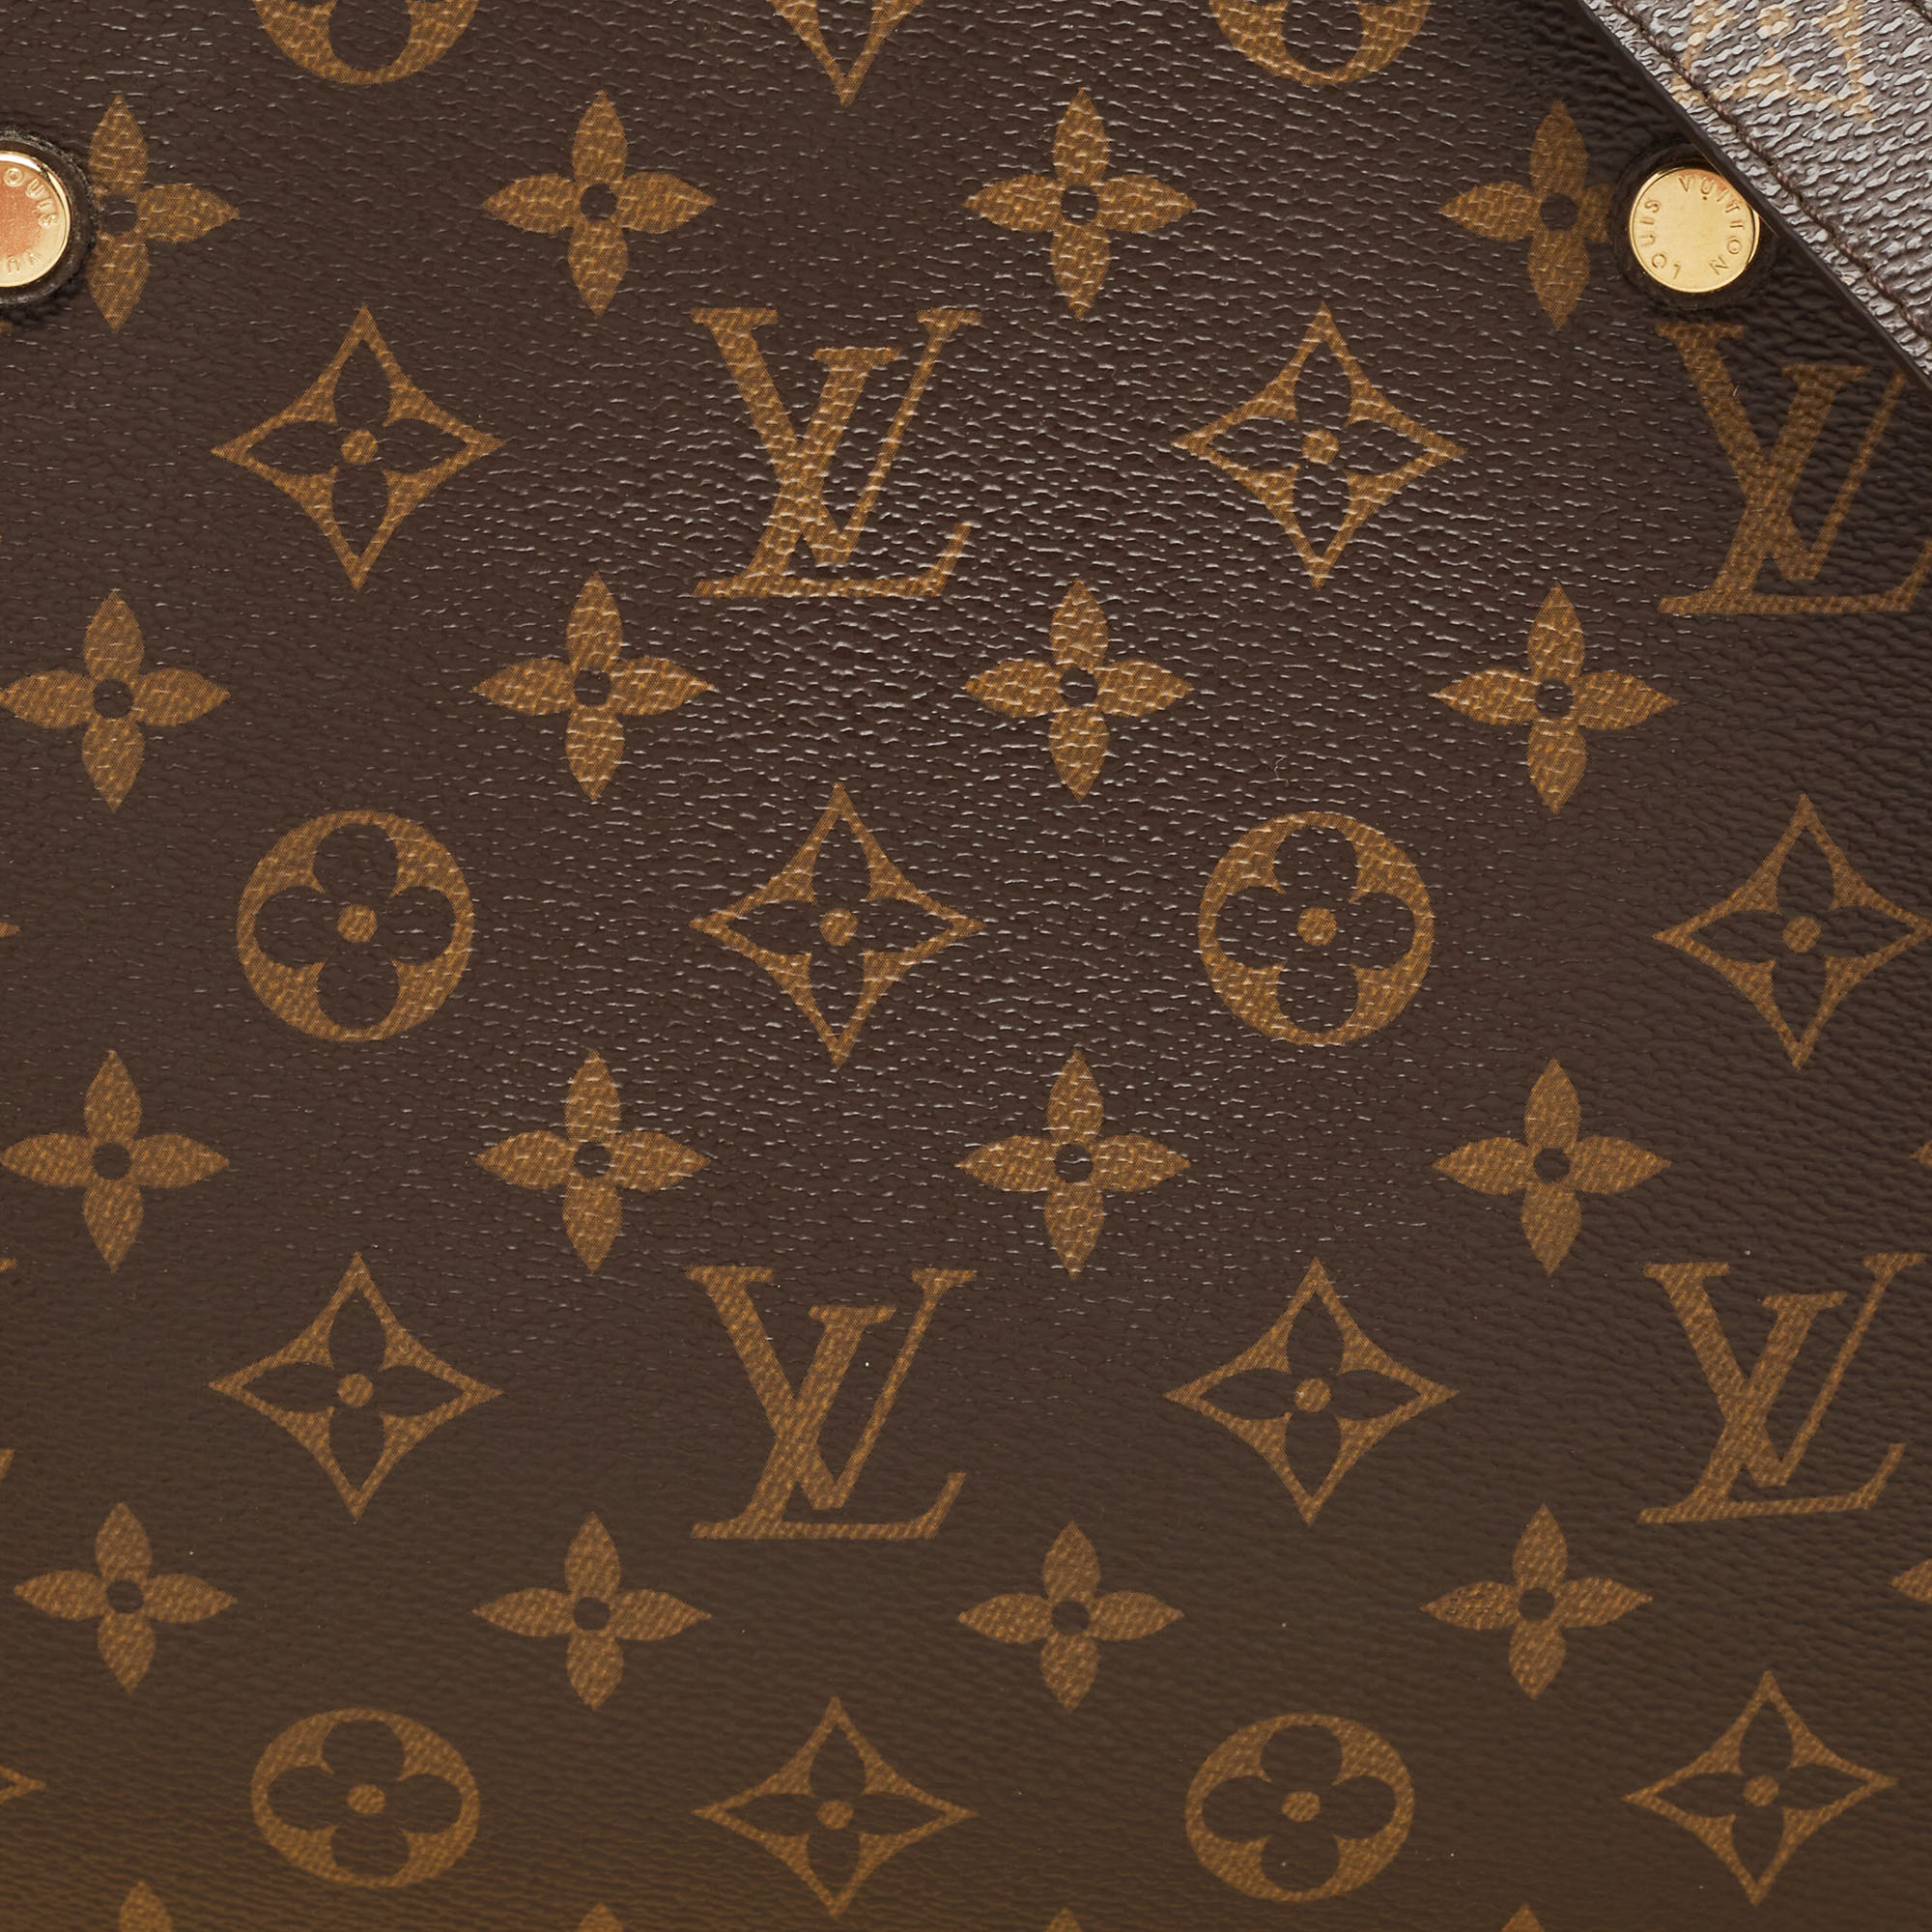 Louis Vuitton Monogram Canvas Montaigne BB Bag